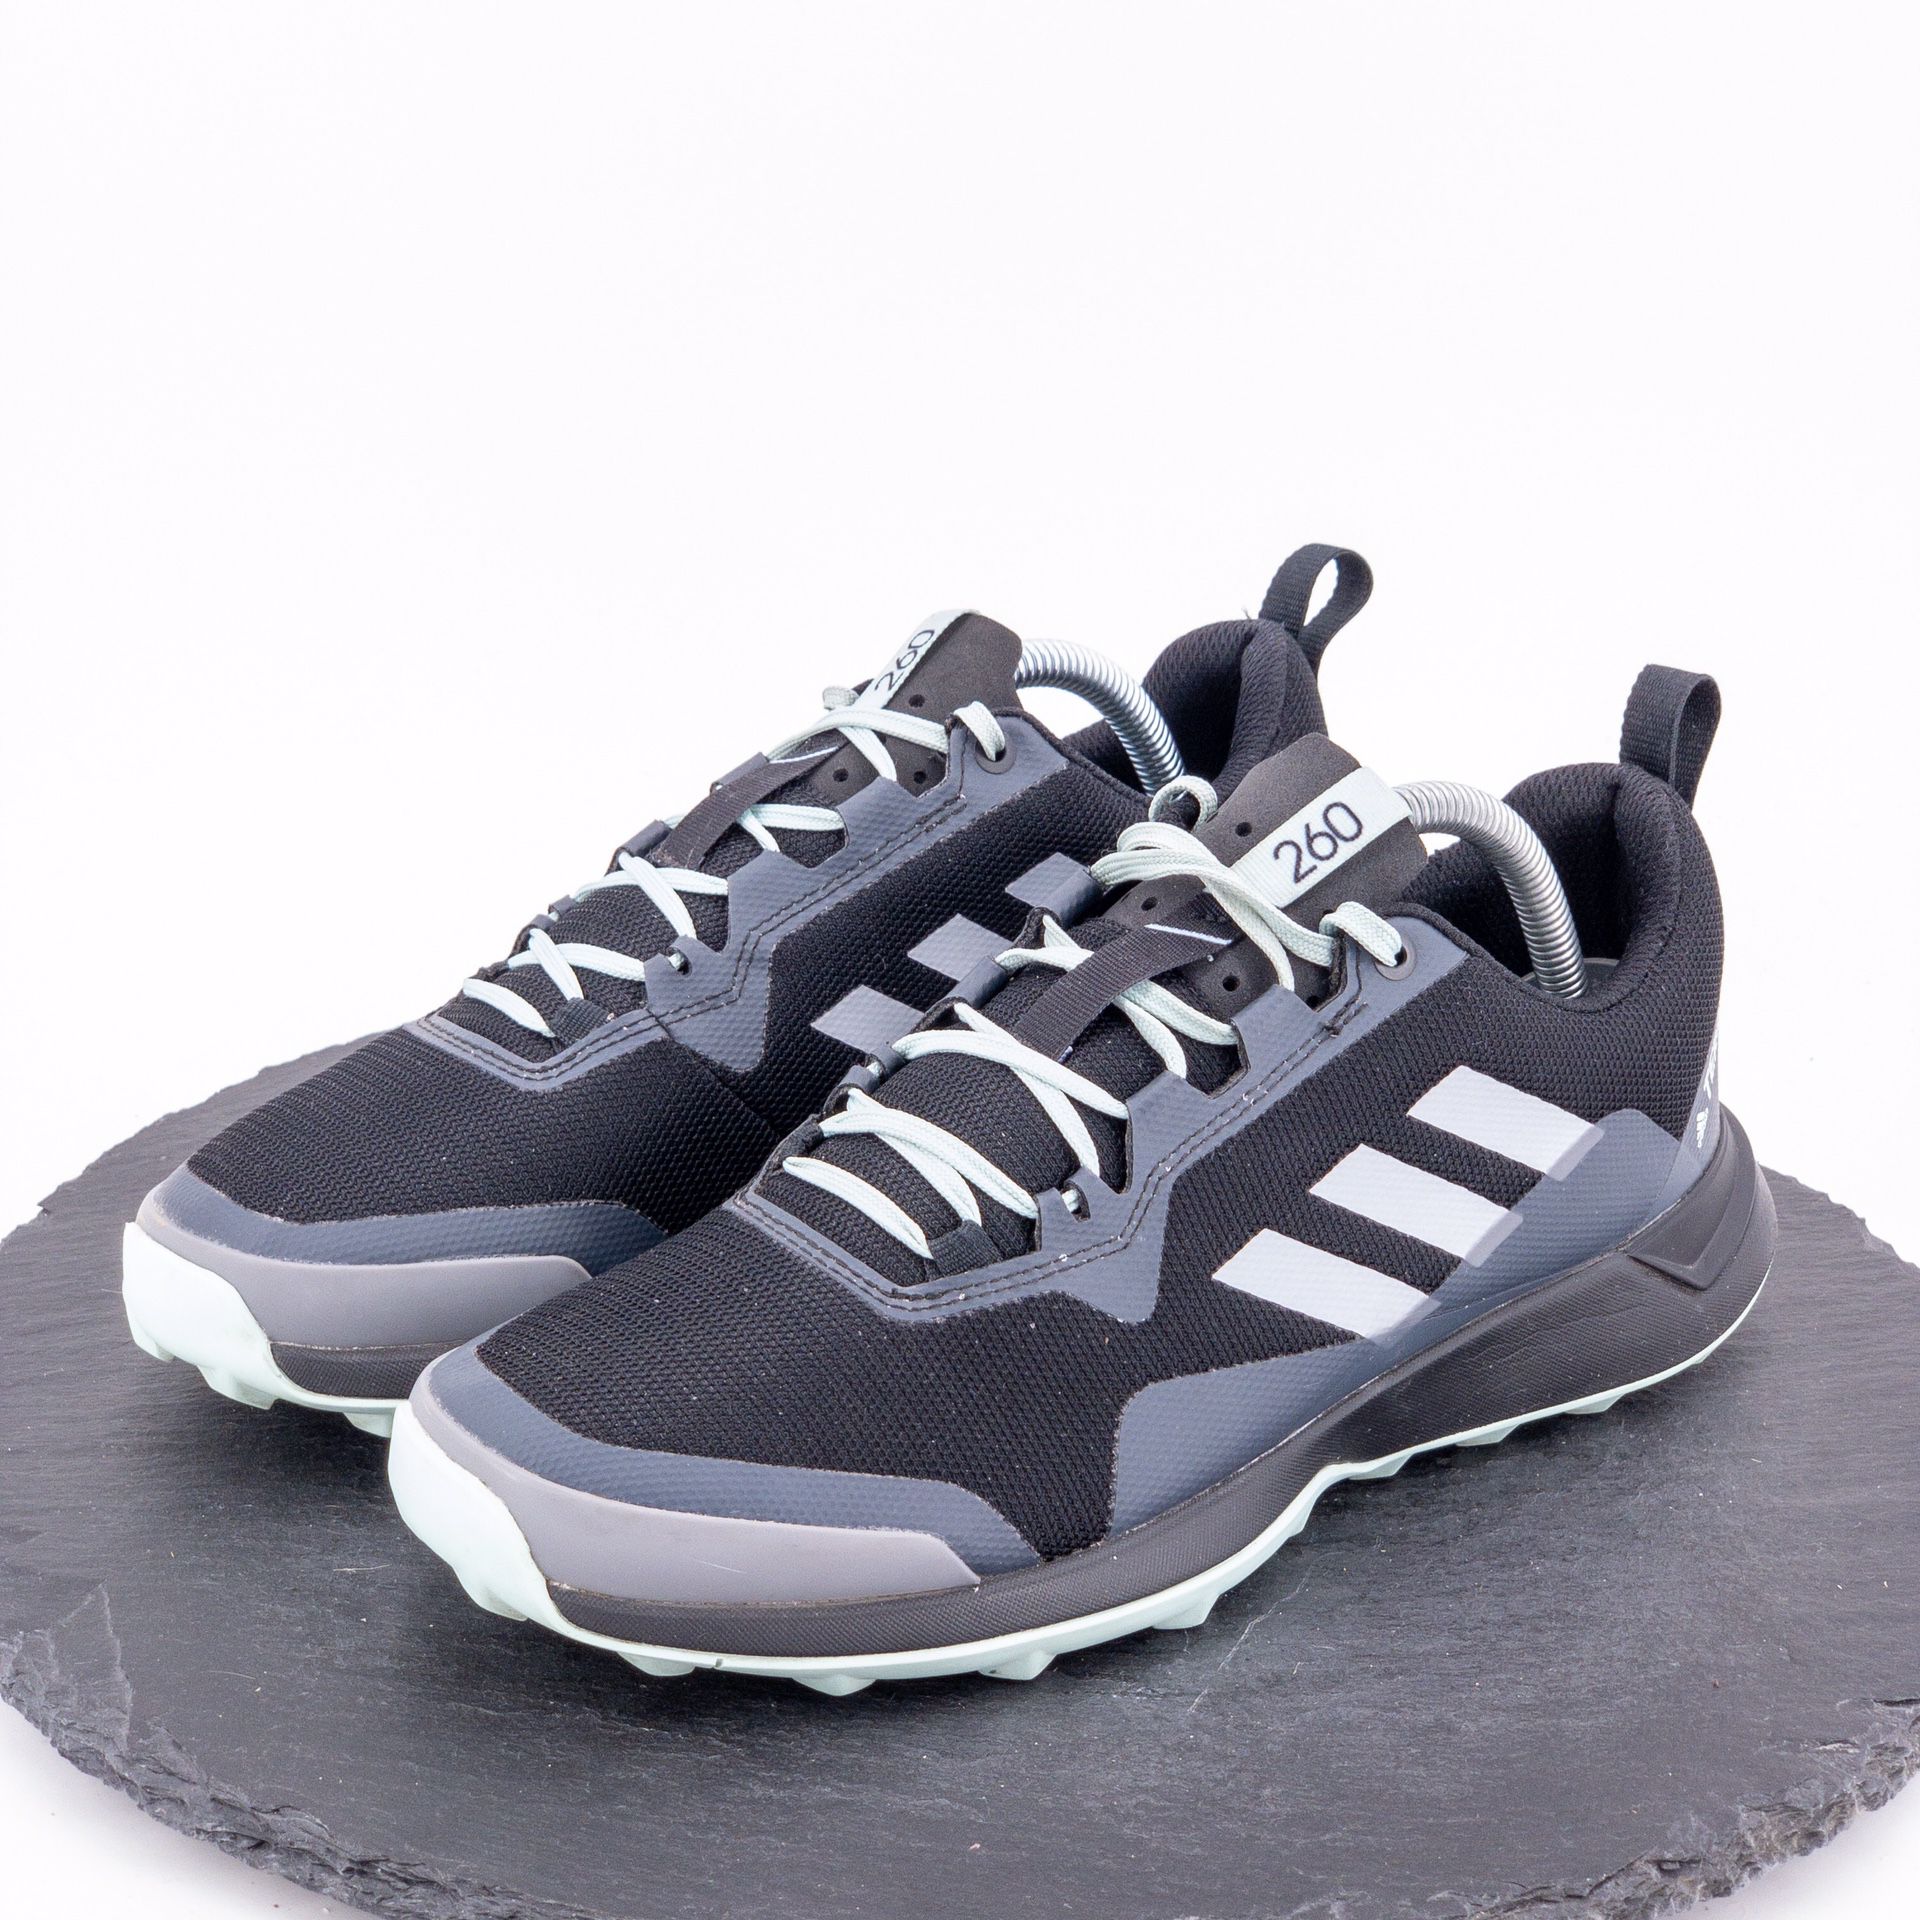 Adidas Terrex 260 Women's Shoes Size 9 for Sale in Omaha, NE -